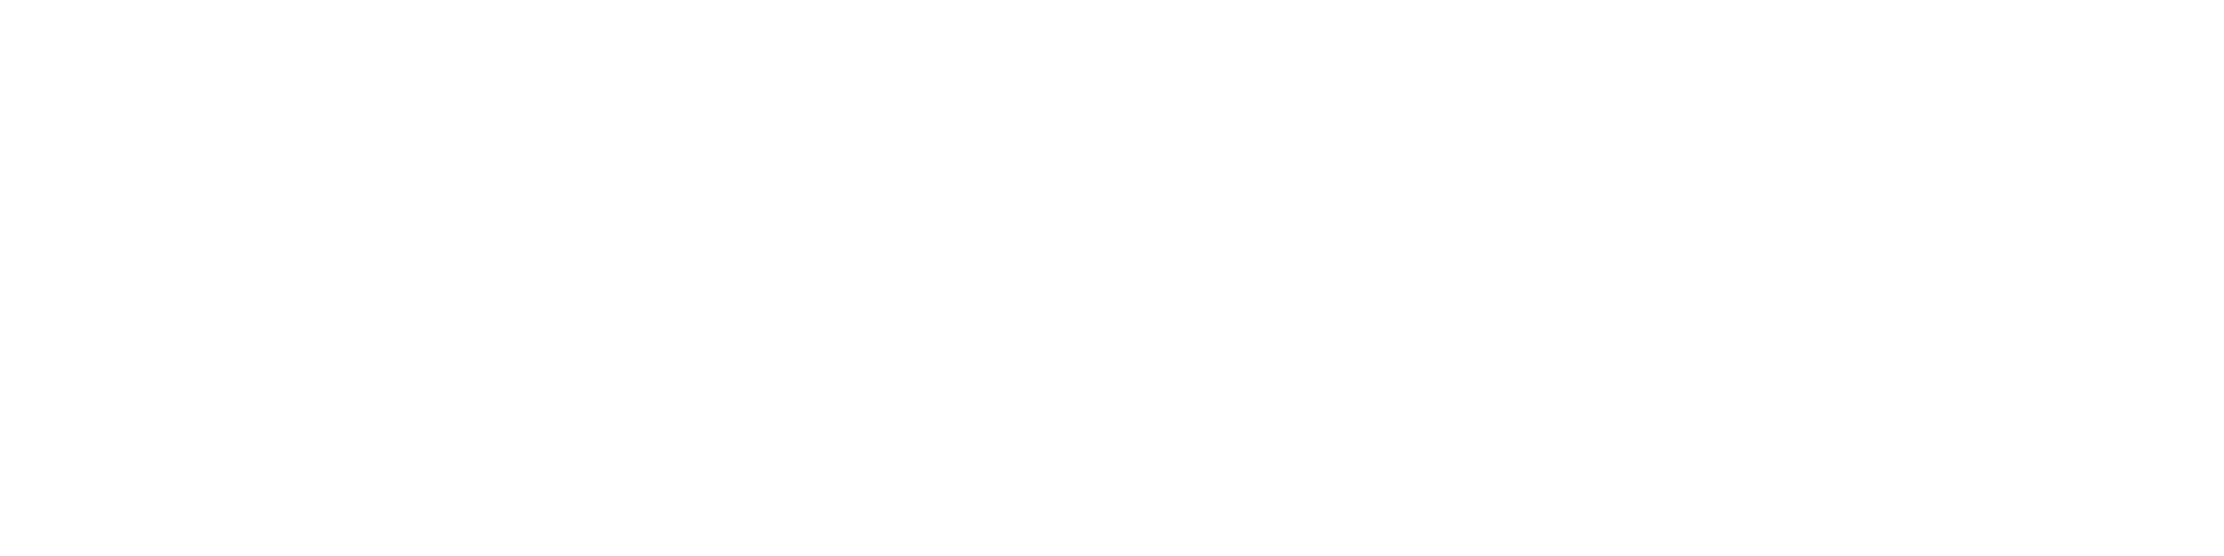 veracity-logo